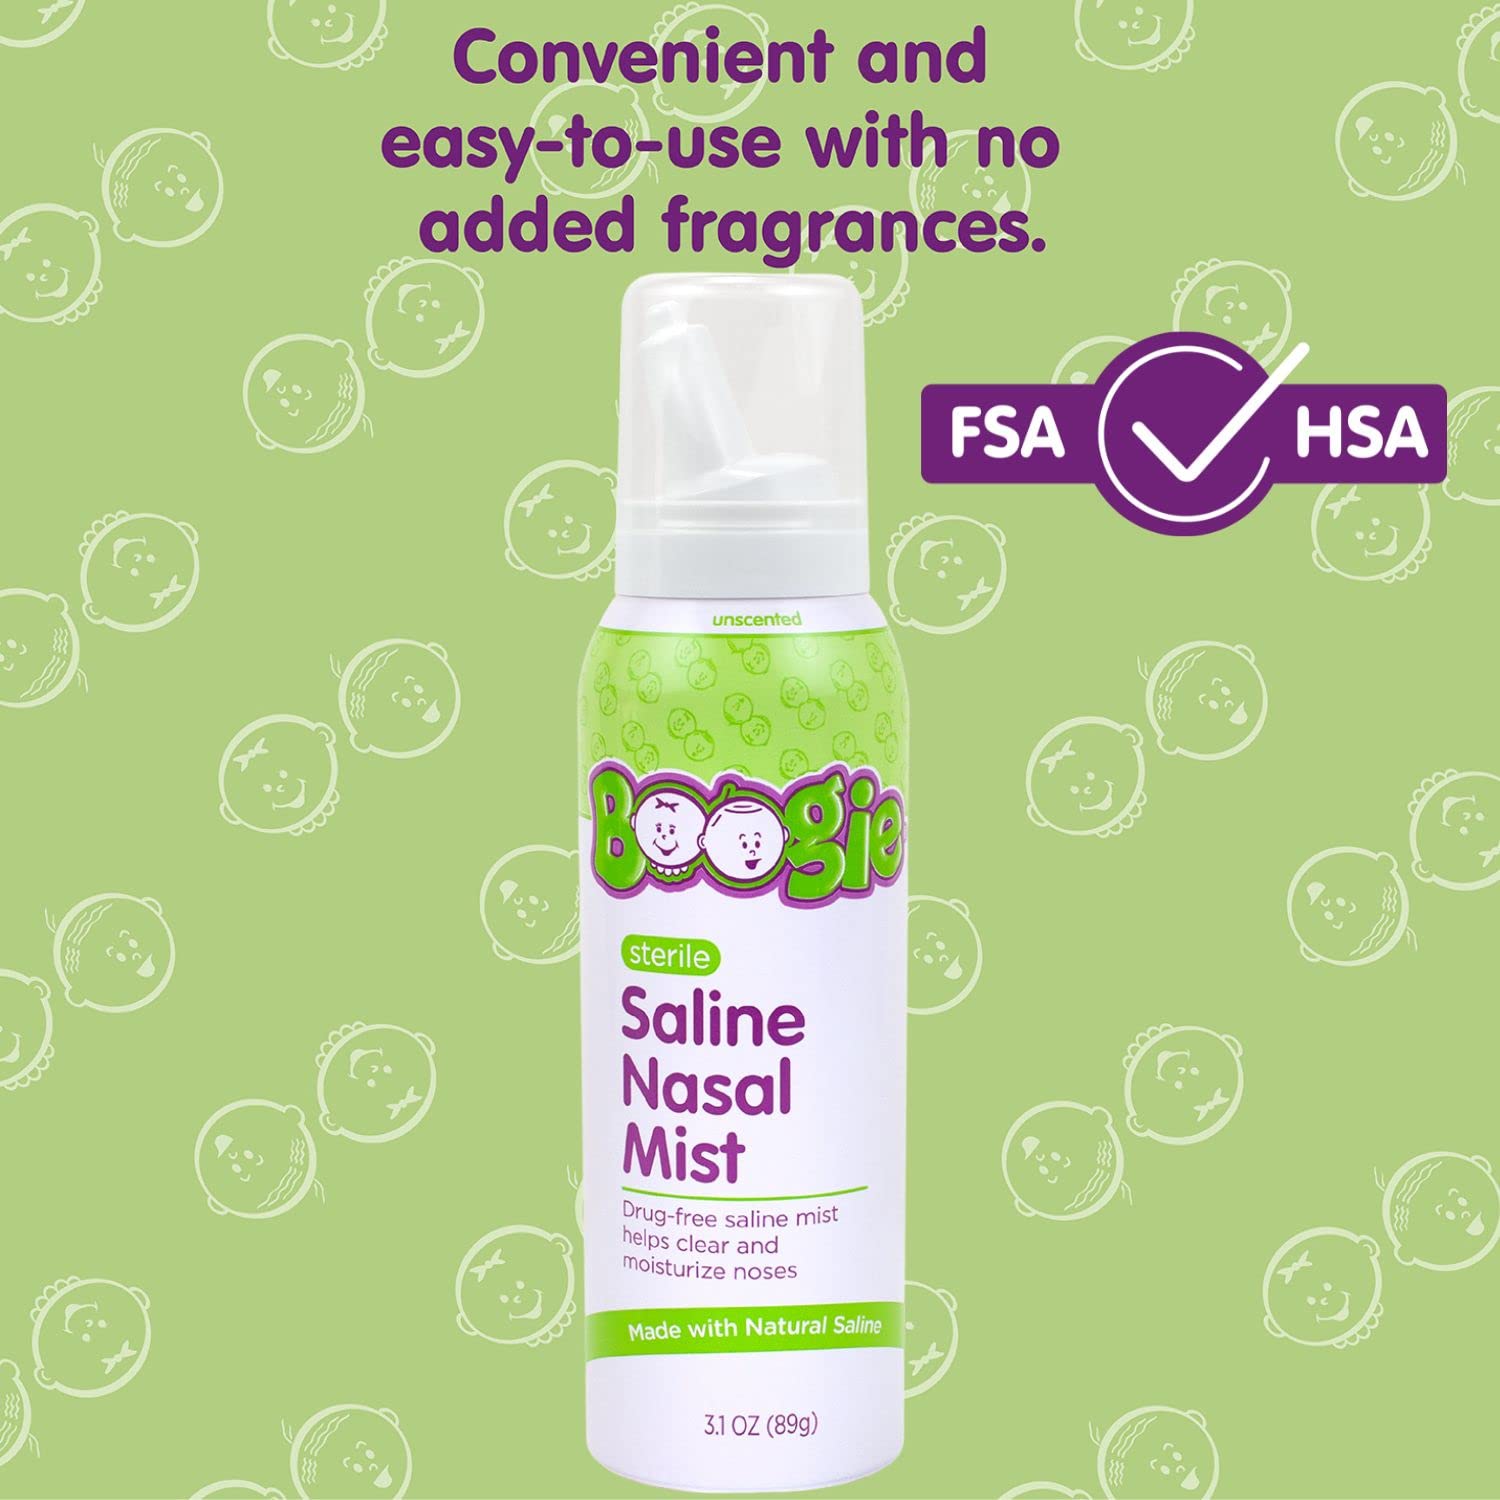 Boogie Baby Saline Nasal Spray Mist, Allergy Relief, Nasal Decongestant, FSA/HSA Eligible, Made with Saline, Unscented, 3.1 Ounce